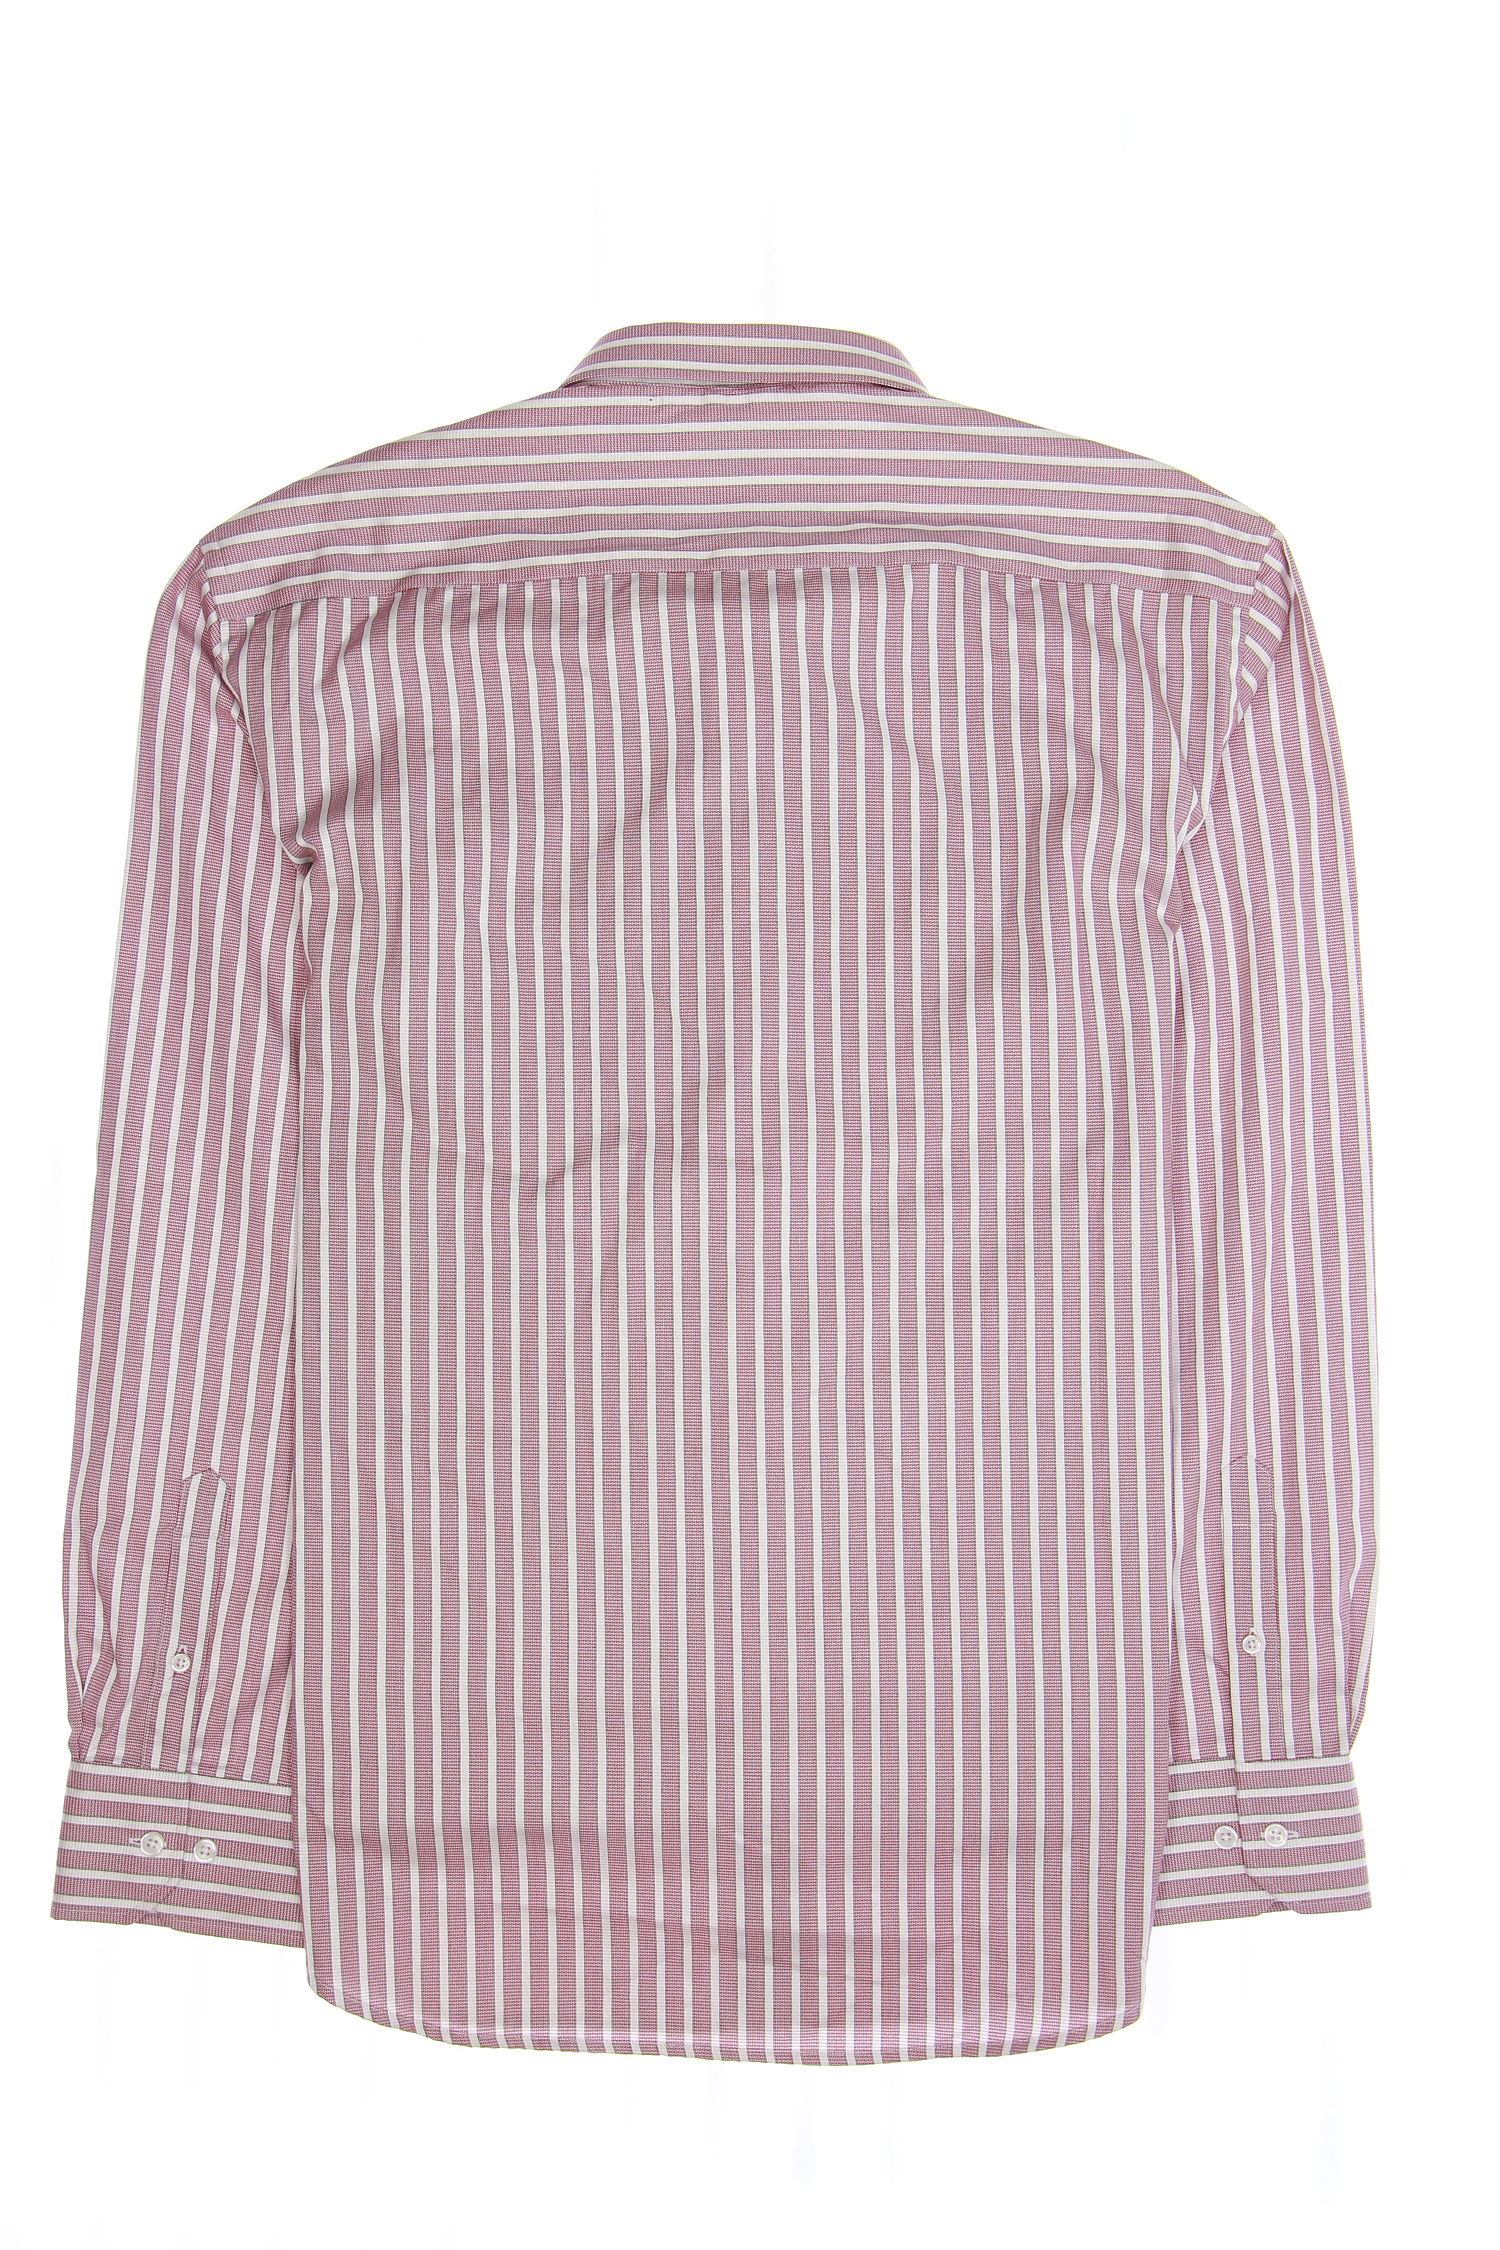 Robert Graham 'Puddle Dock' Mens Burgundy Striped Button Down Shirt